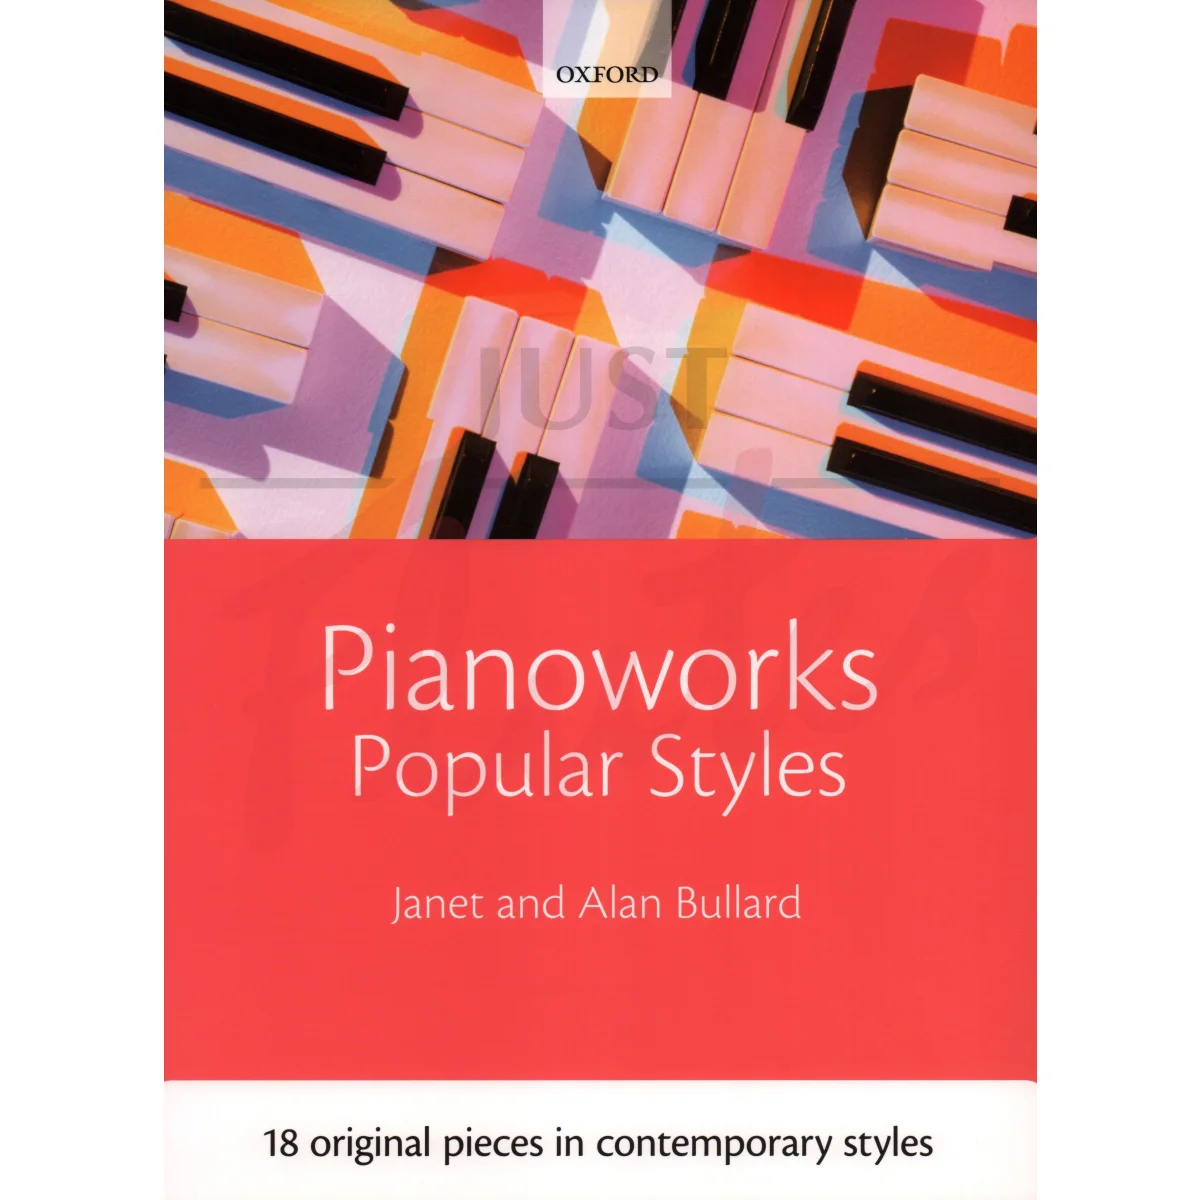 Pianoworks - Popular Styles